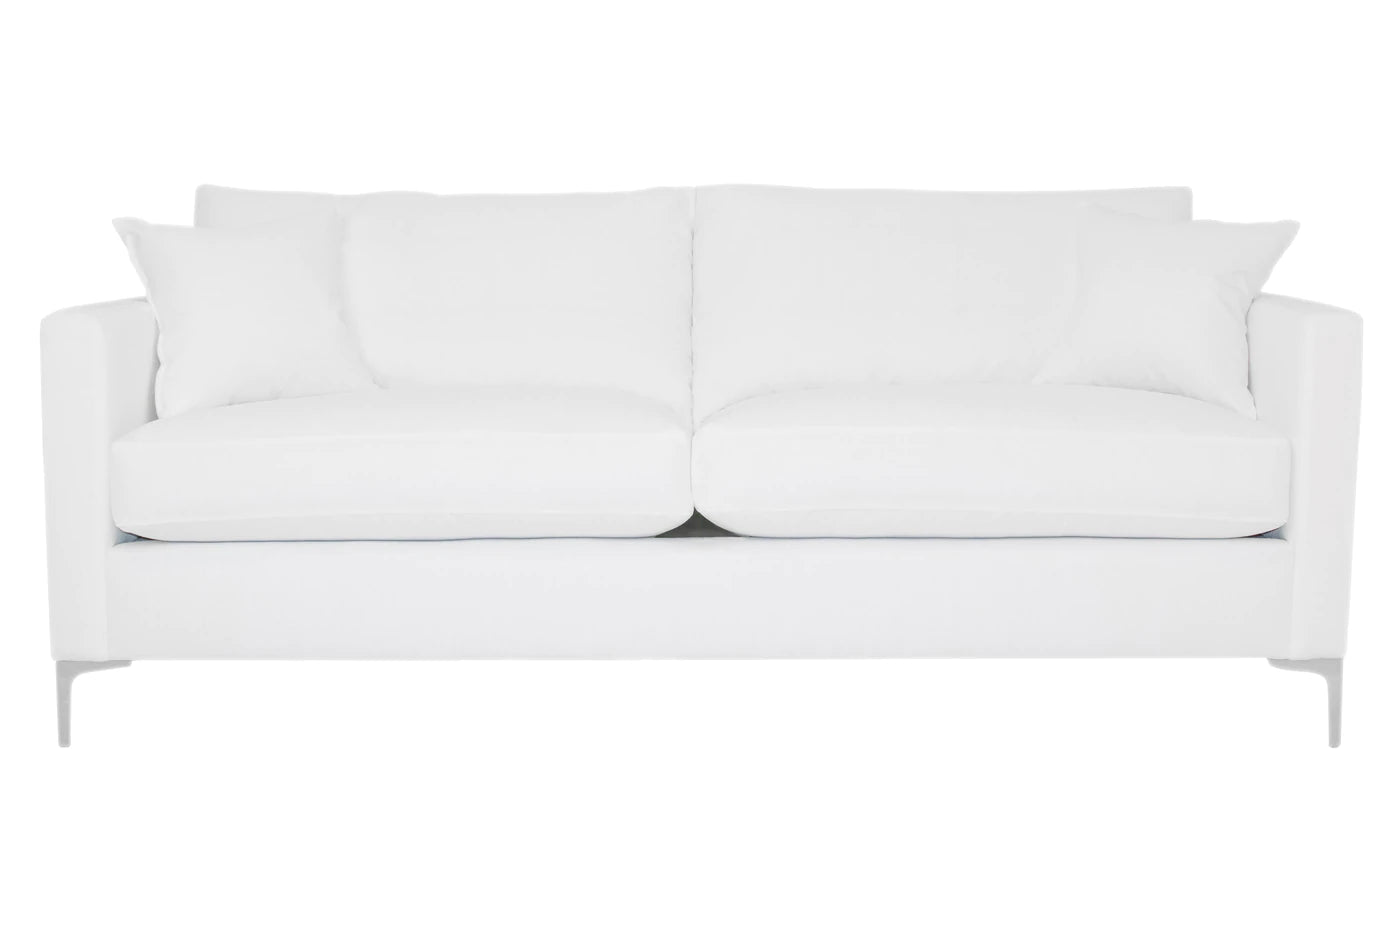 Sooke sofa by Vangogh Designs, made in BC, Canada